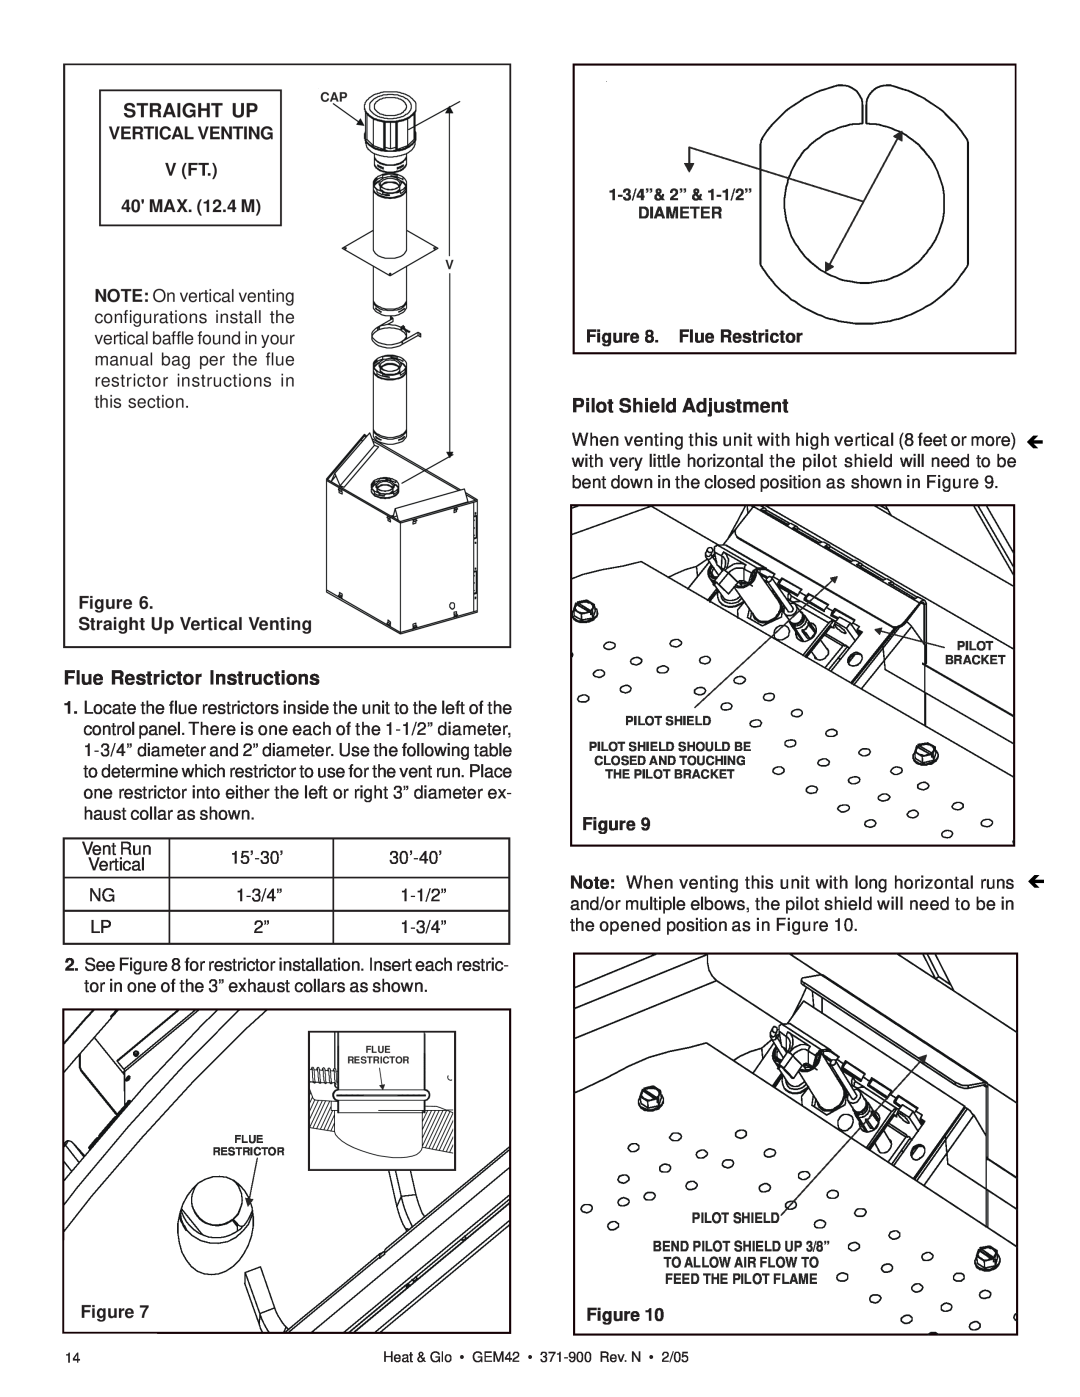 Heat & Glo LifeStyle GEM42 manual Straight Up, Flue Restrictor Instructions, Pilot Shield Adjustment 